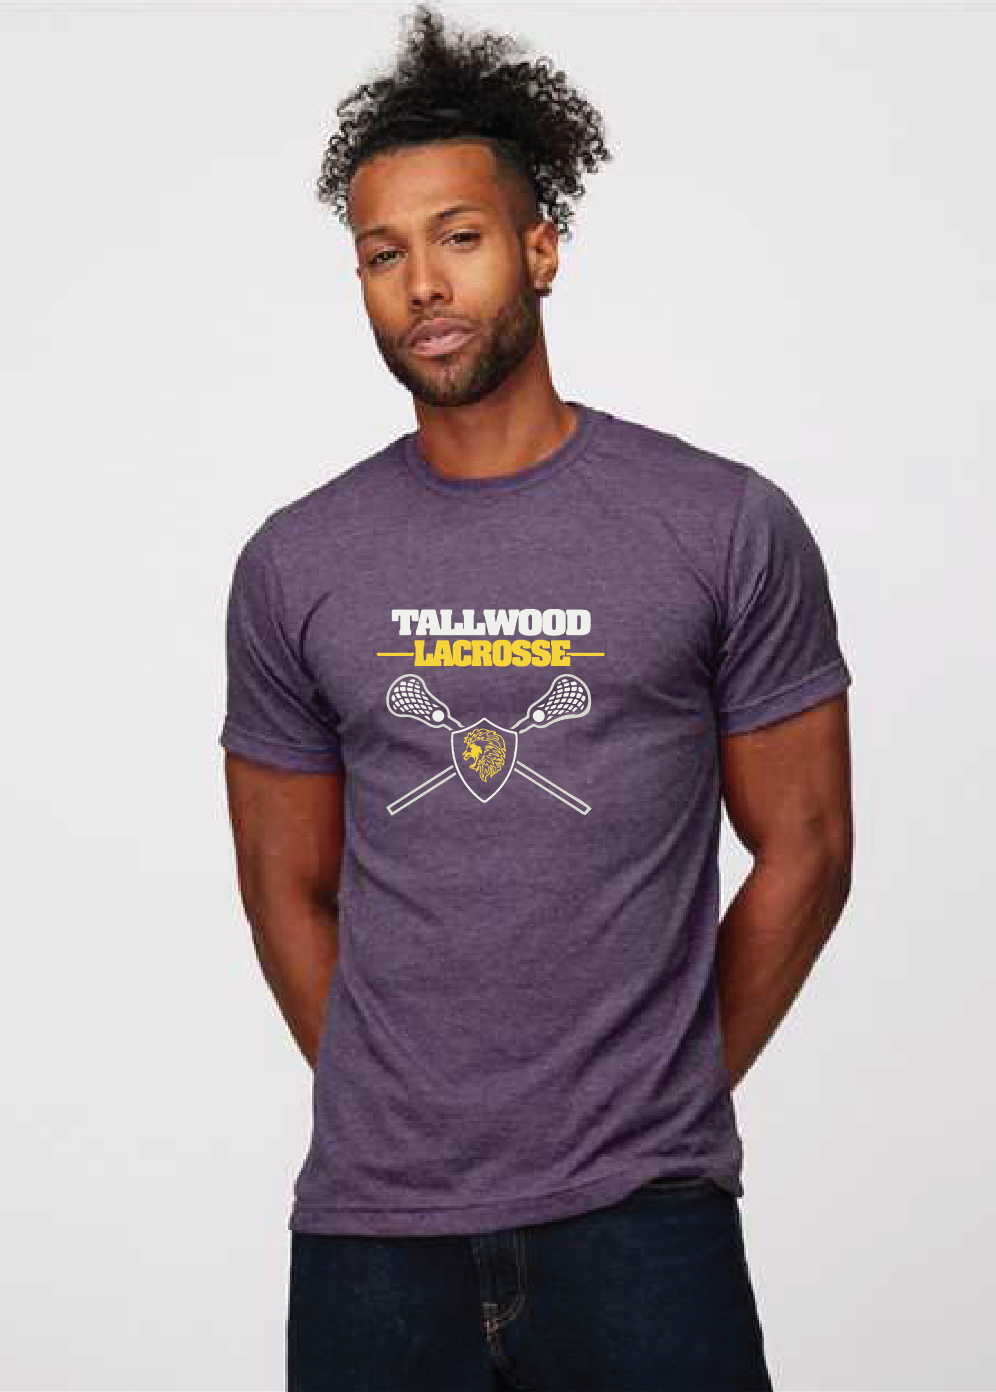 Unisex Poly-Rich T-Shirt  / Heather Purple / Tallwood High School Lacrosse